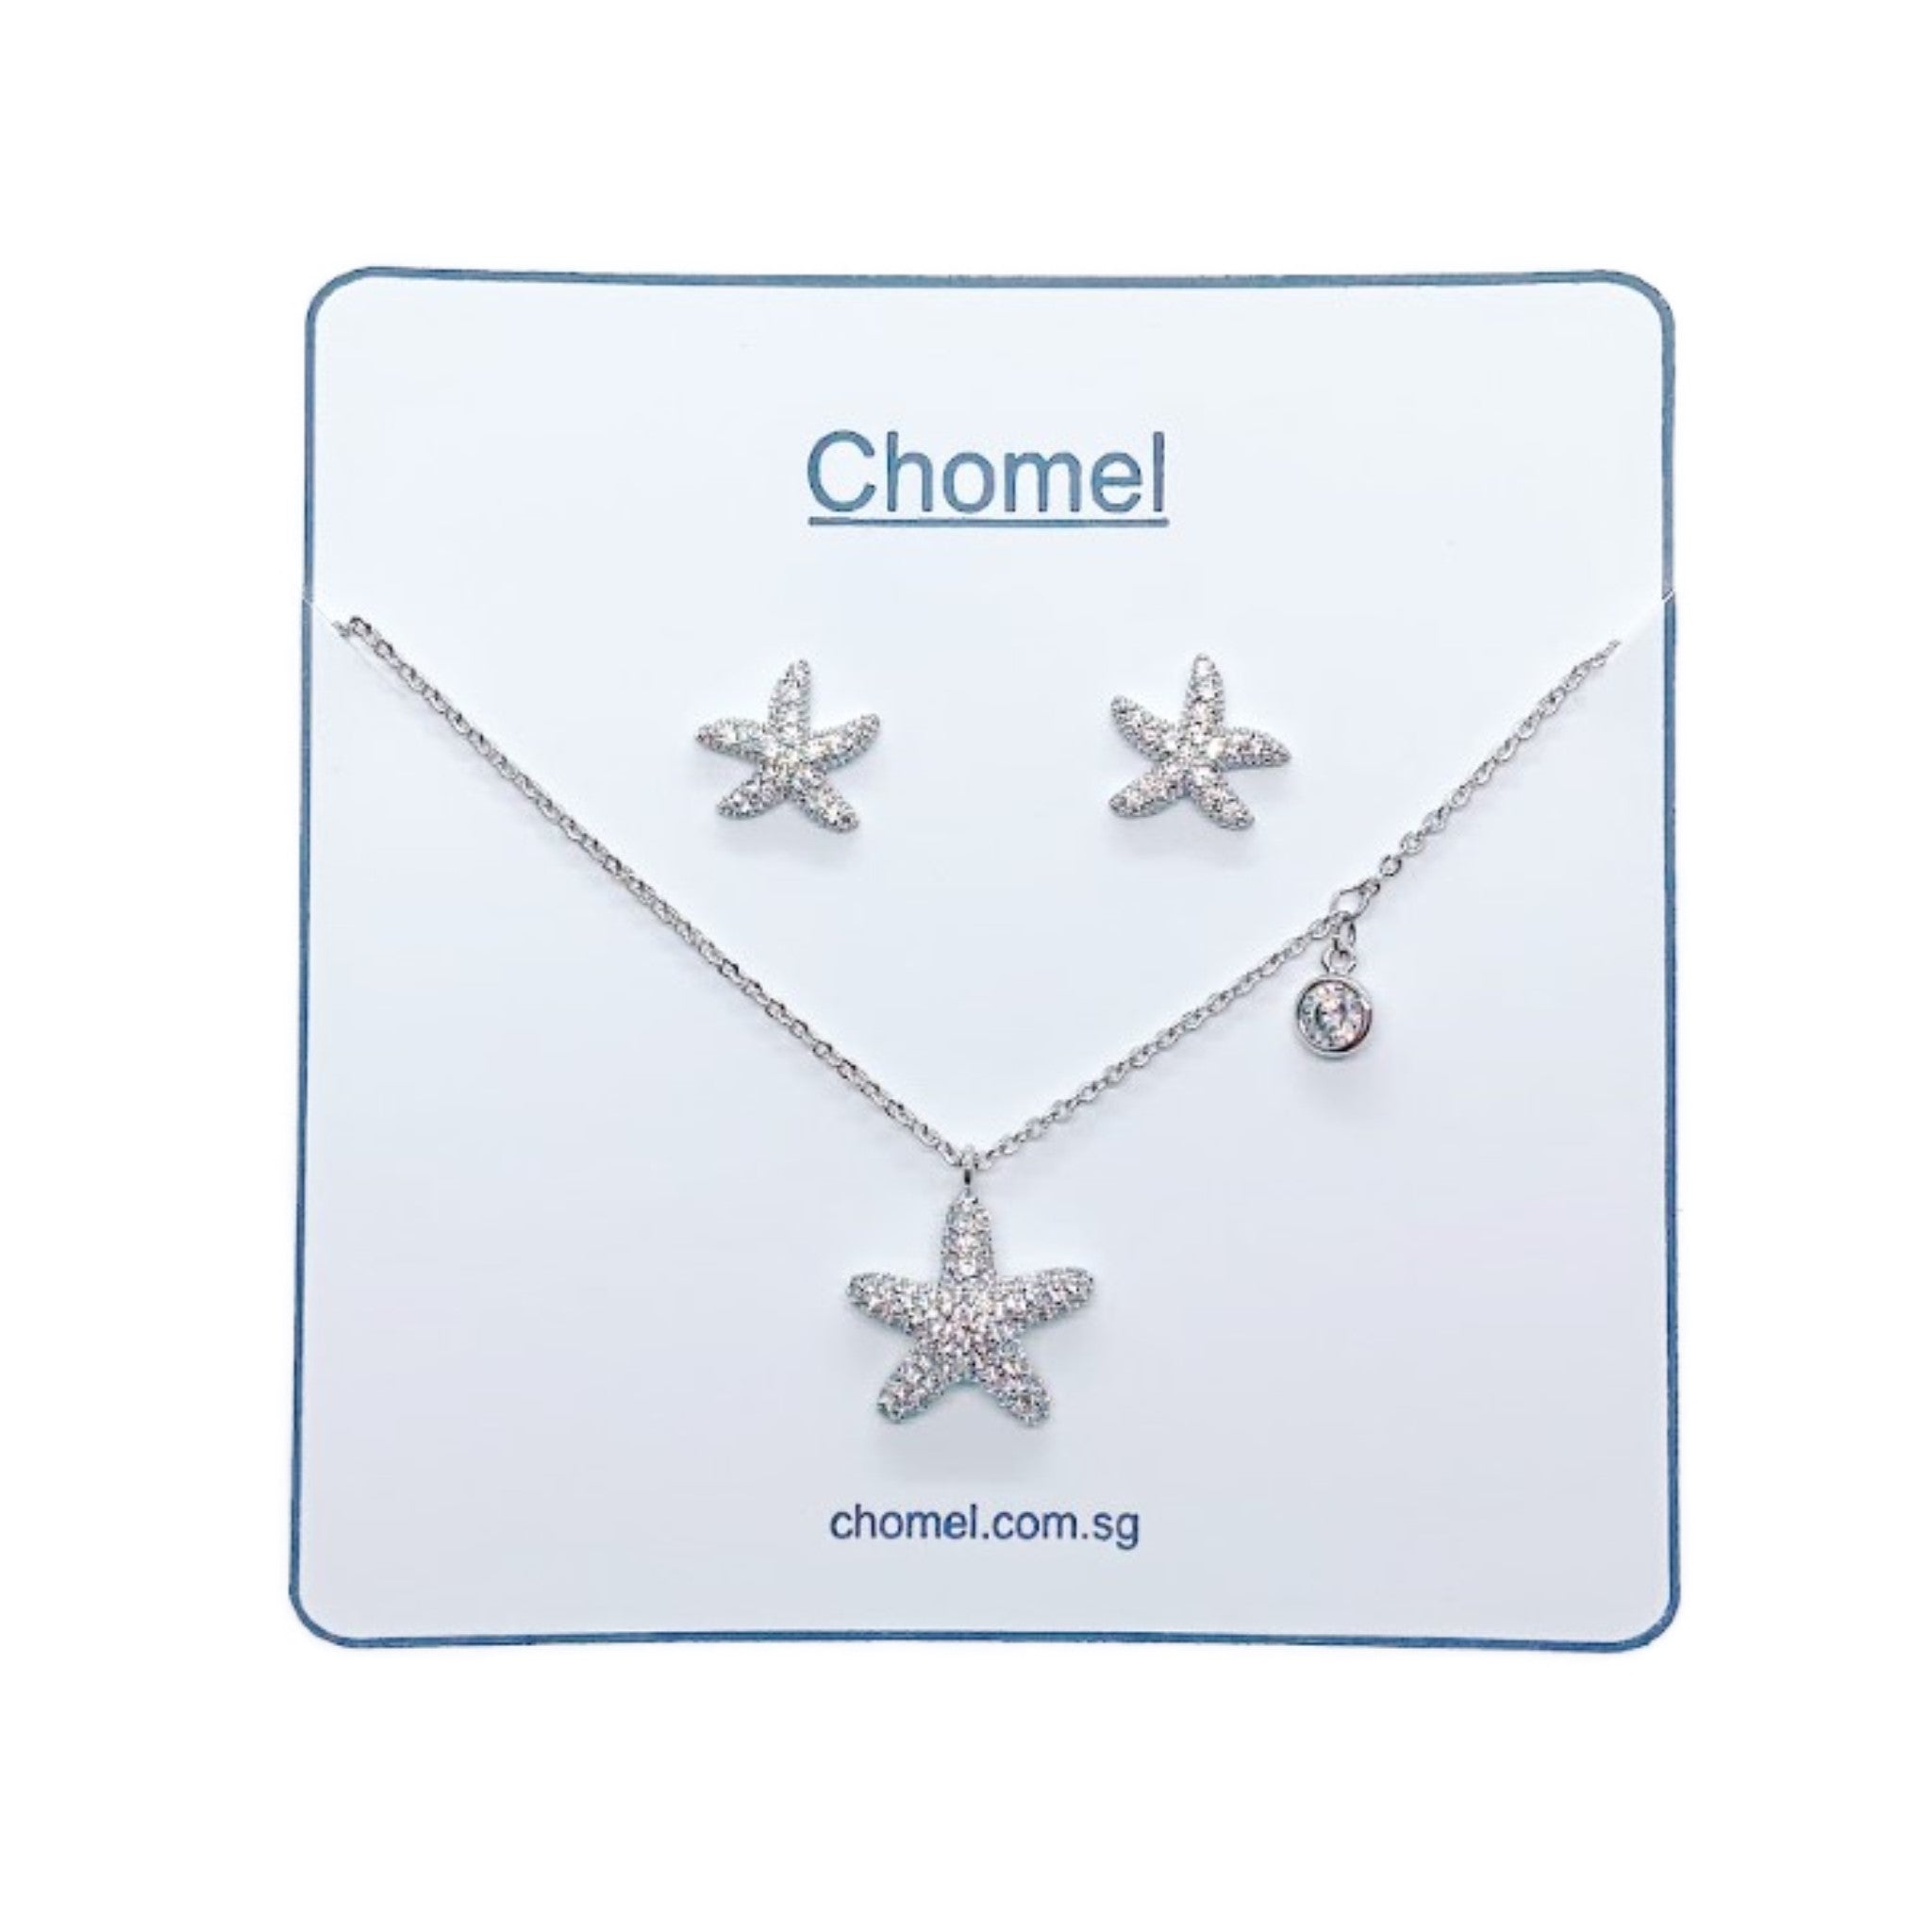 Starfish Cubic Zirconia Necklace & Earrings Set.